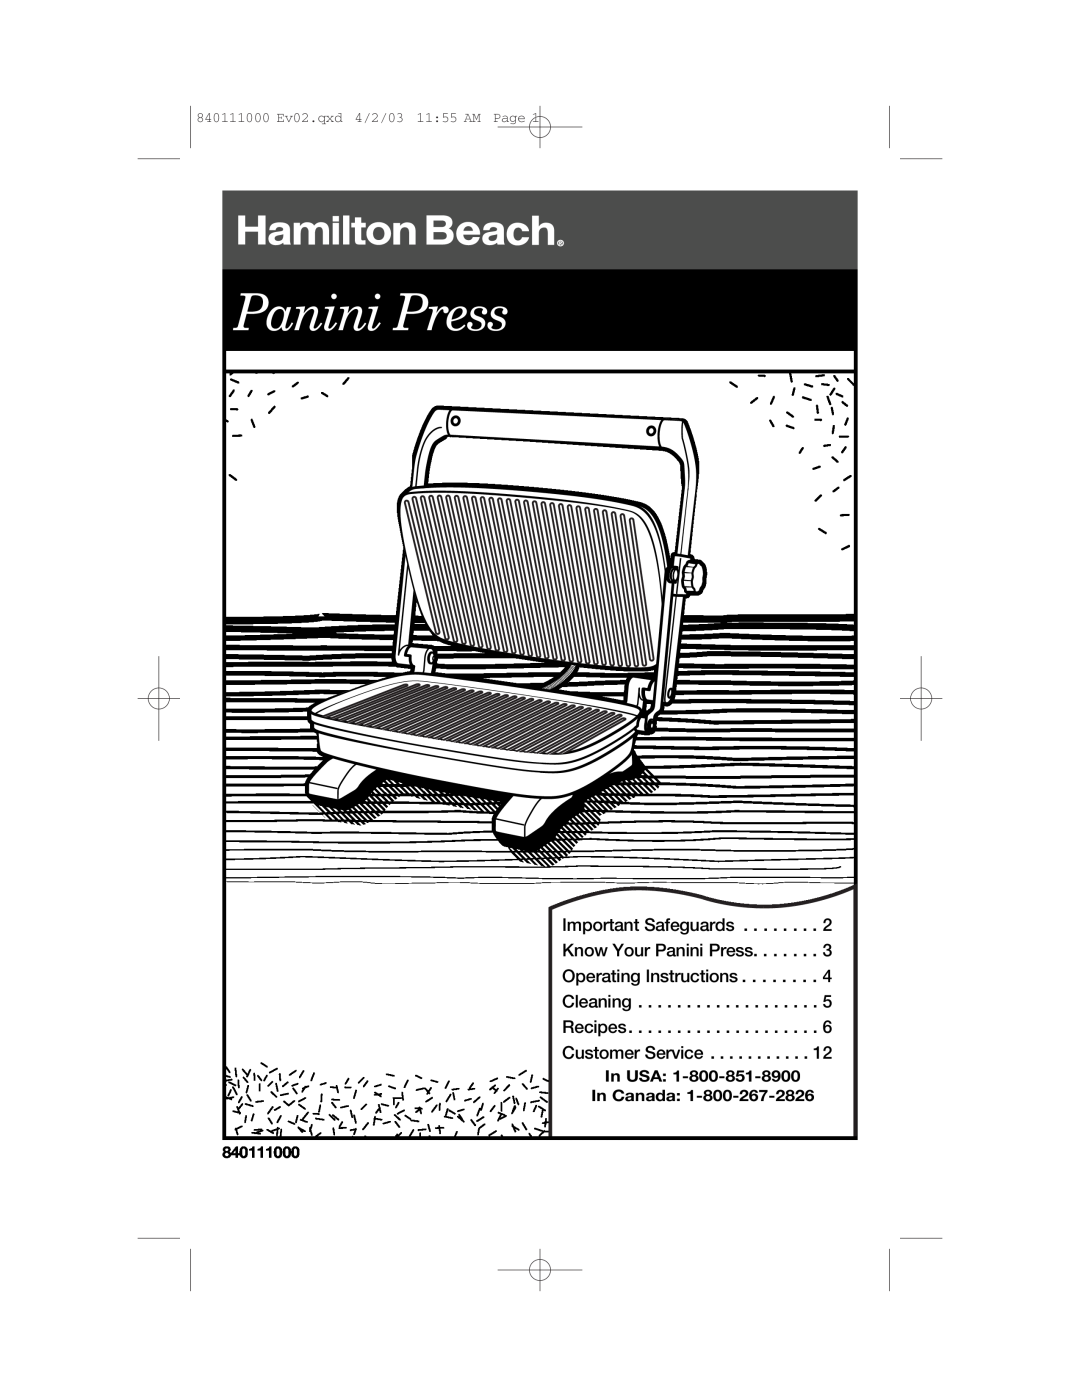 Hamilton Beach 25450 manual Panini Press Presse-panini Prensa para Panini, Read Before Use, Questions?, Questions ? 